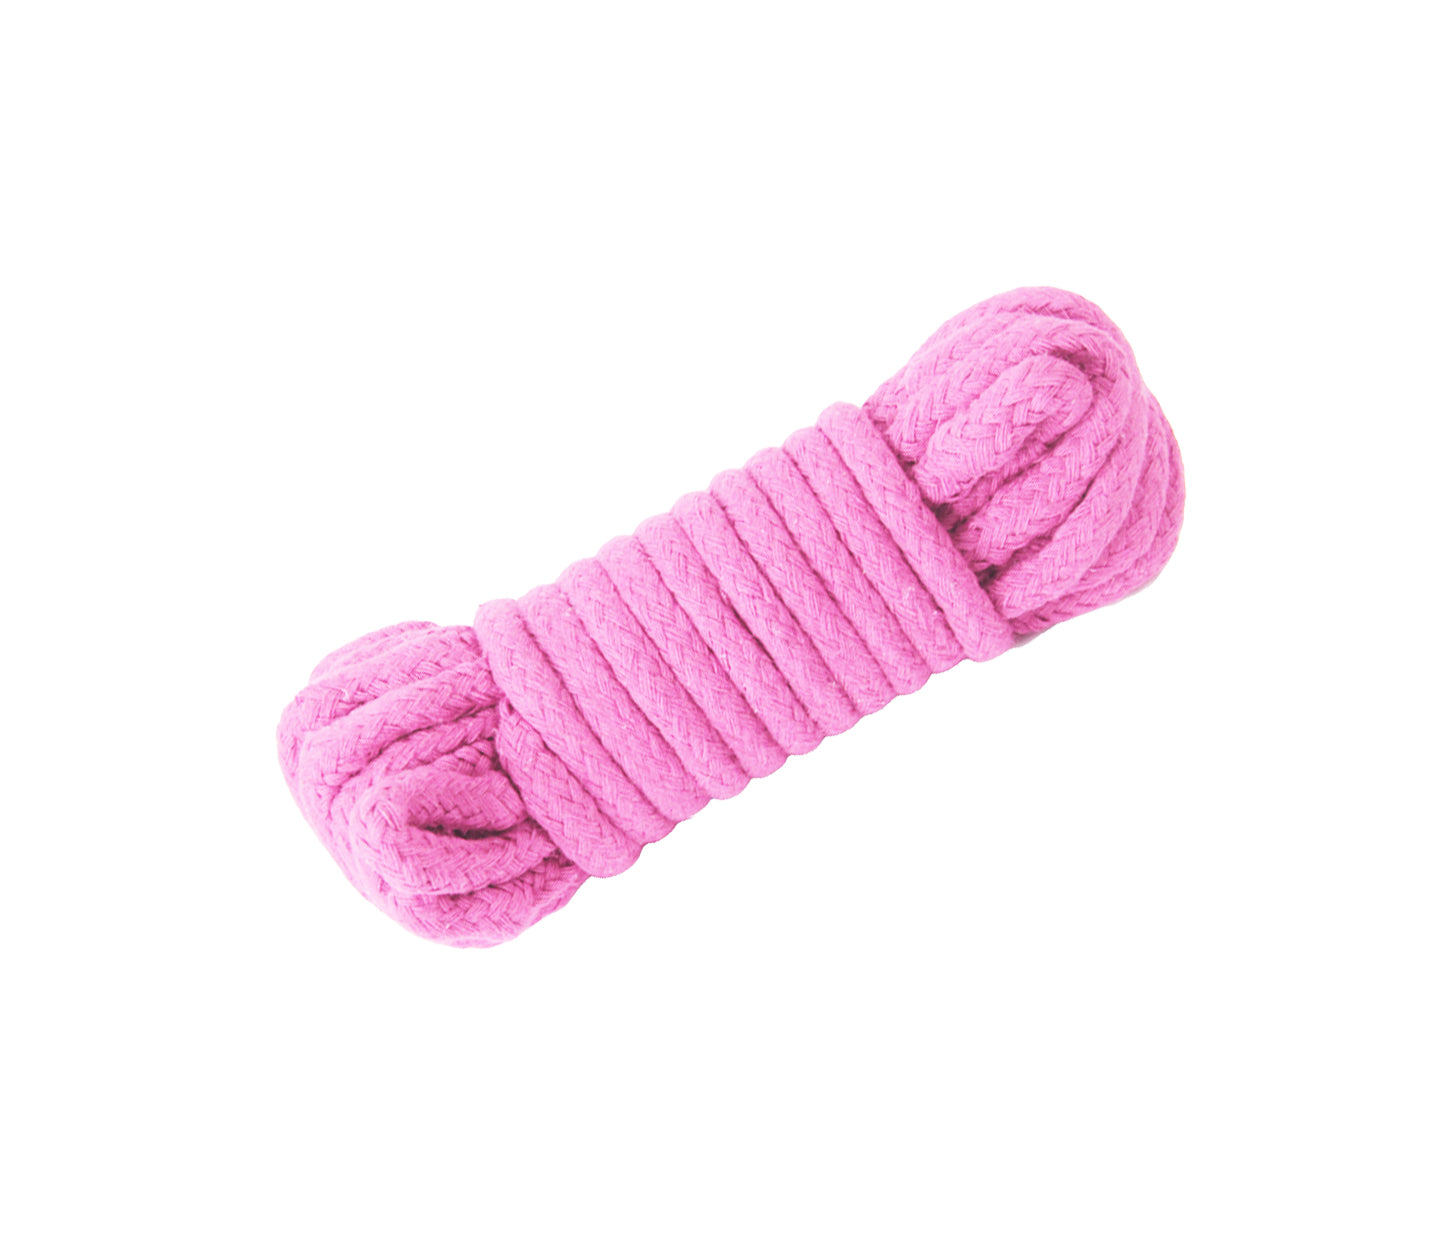 Rop001 10M Cotton Bondage Rope Pink - Club X